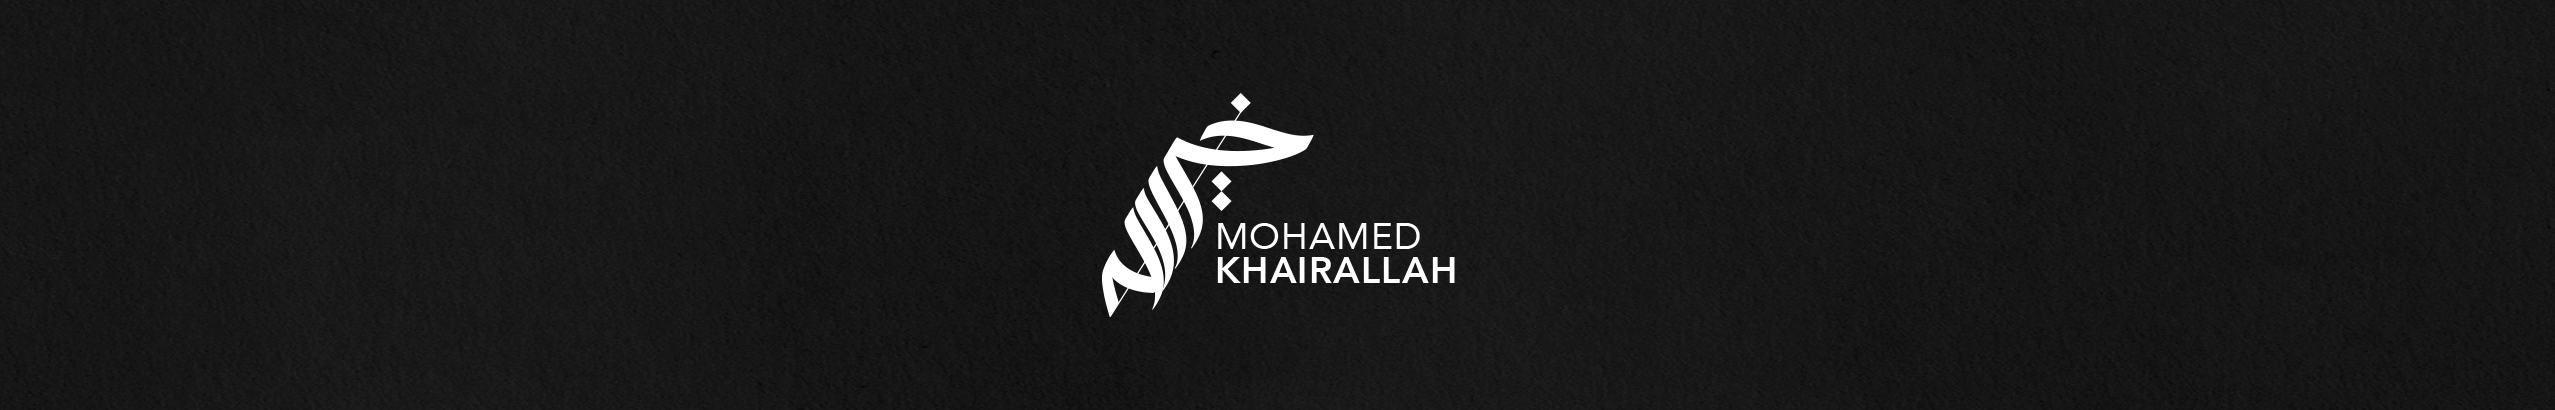 Баннер профиля Mohamed Khairallah